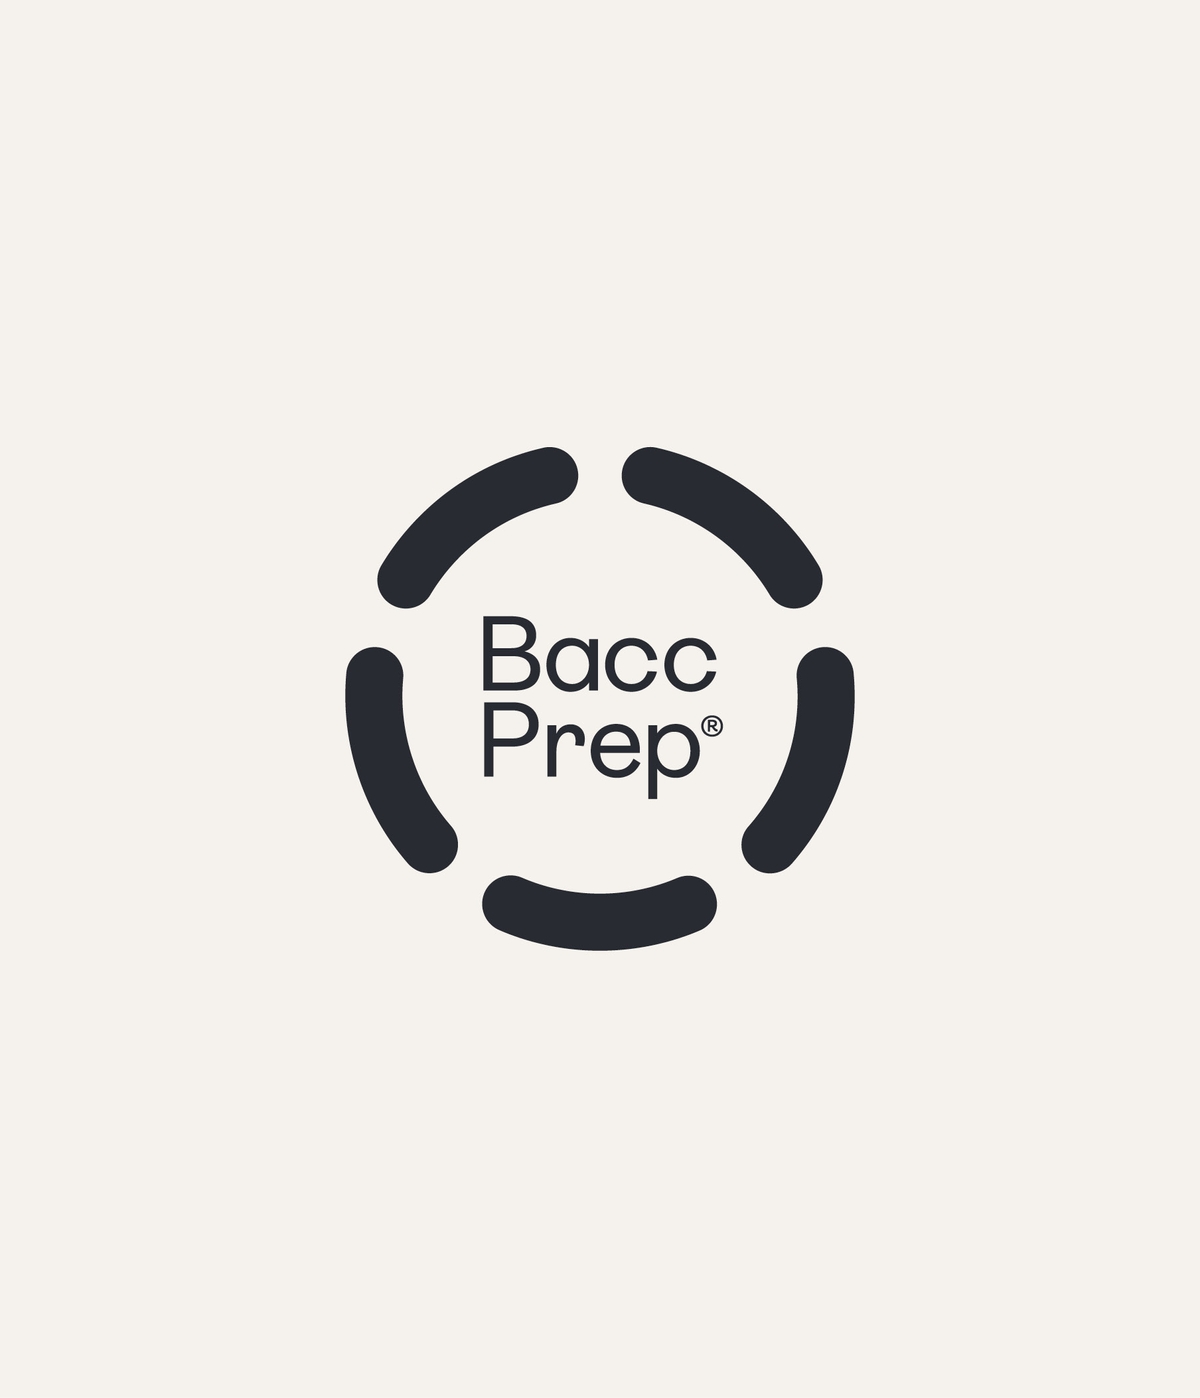 Baccprep Branding - IB Education Black Logo Sqaure | Atollon - a design company